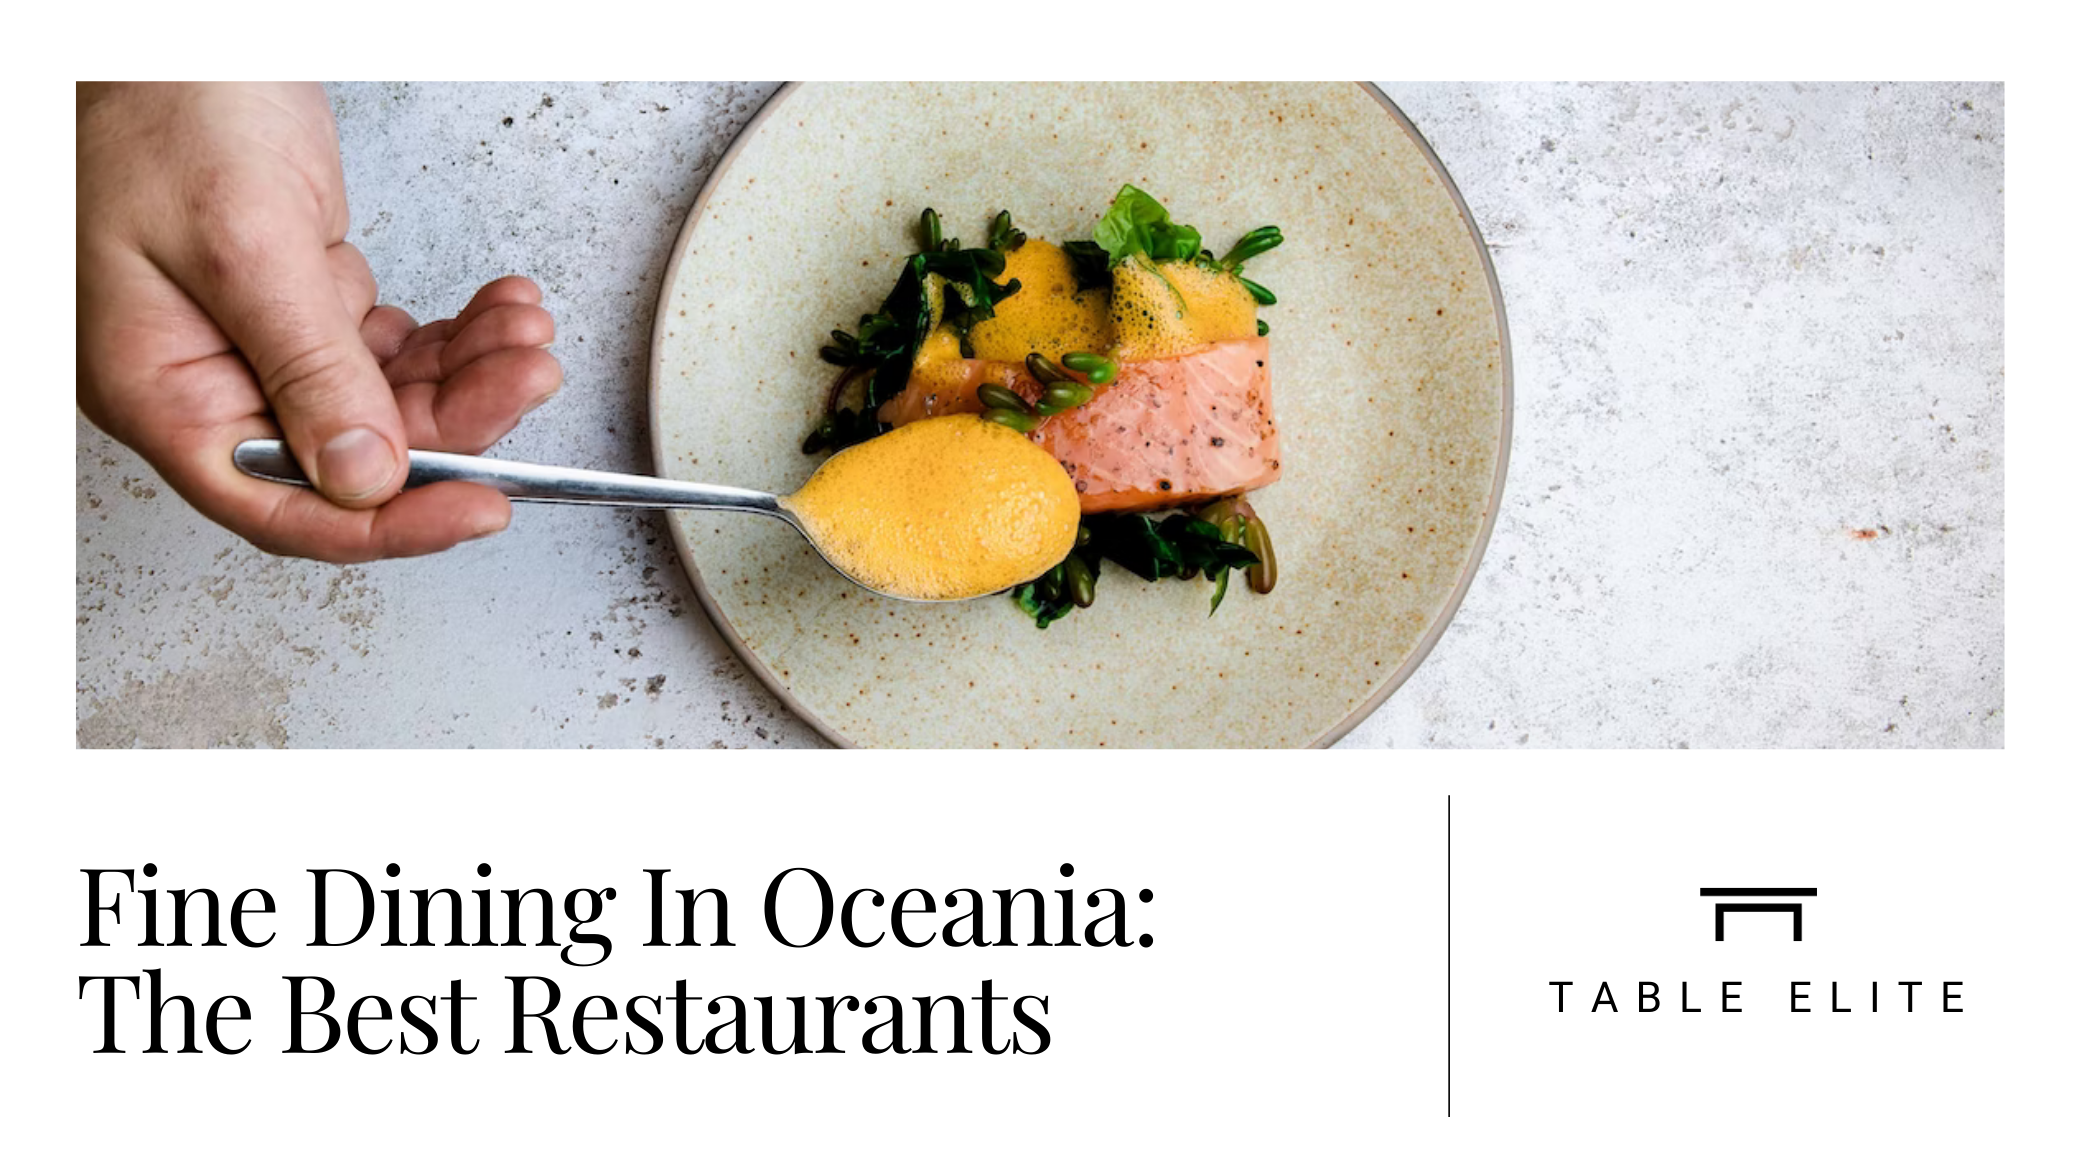 Fine dining in Oceania